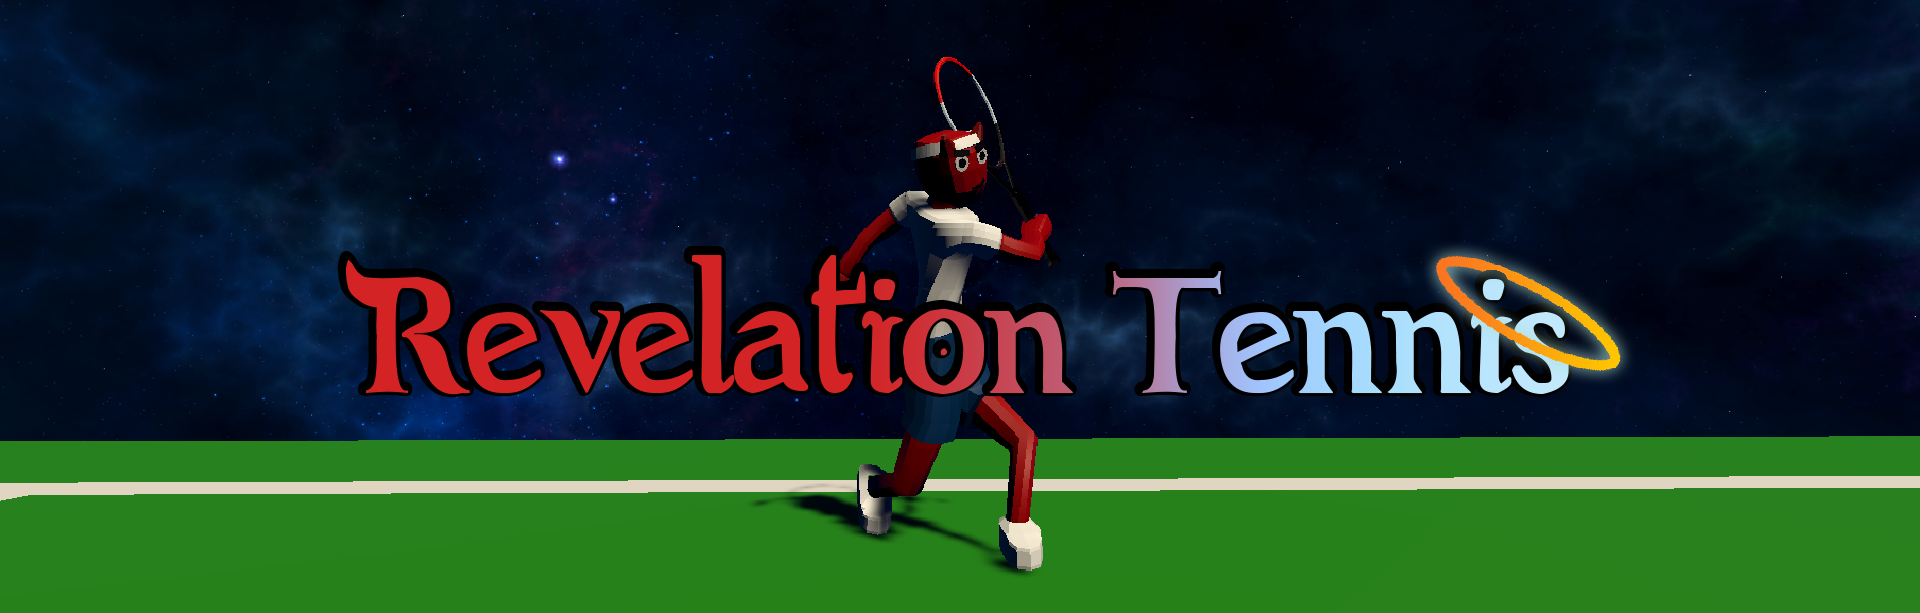 Revelation Tennis